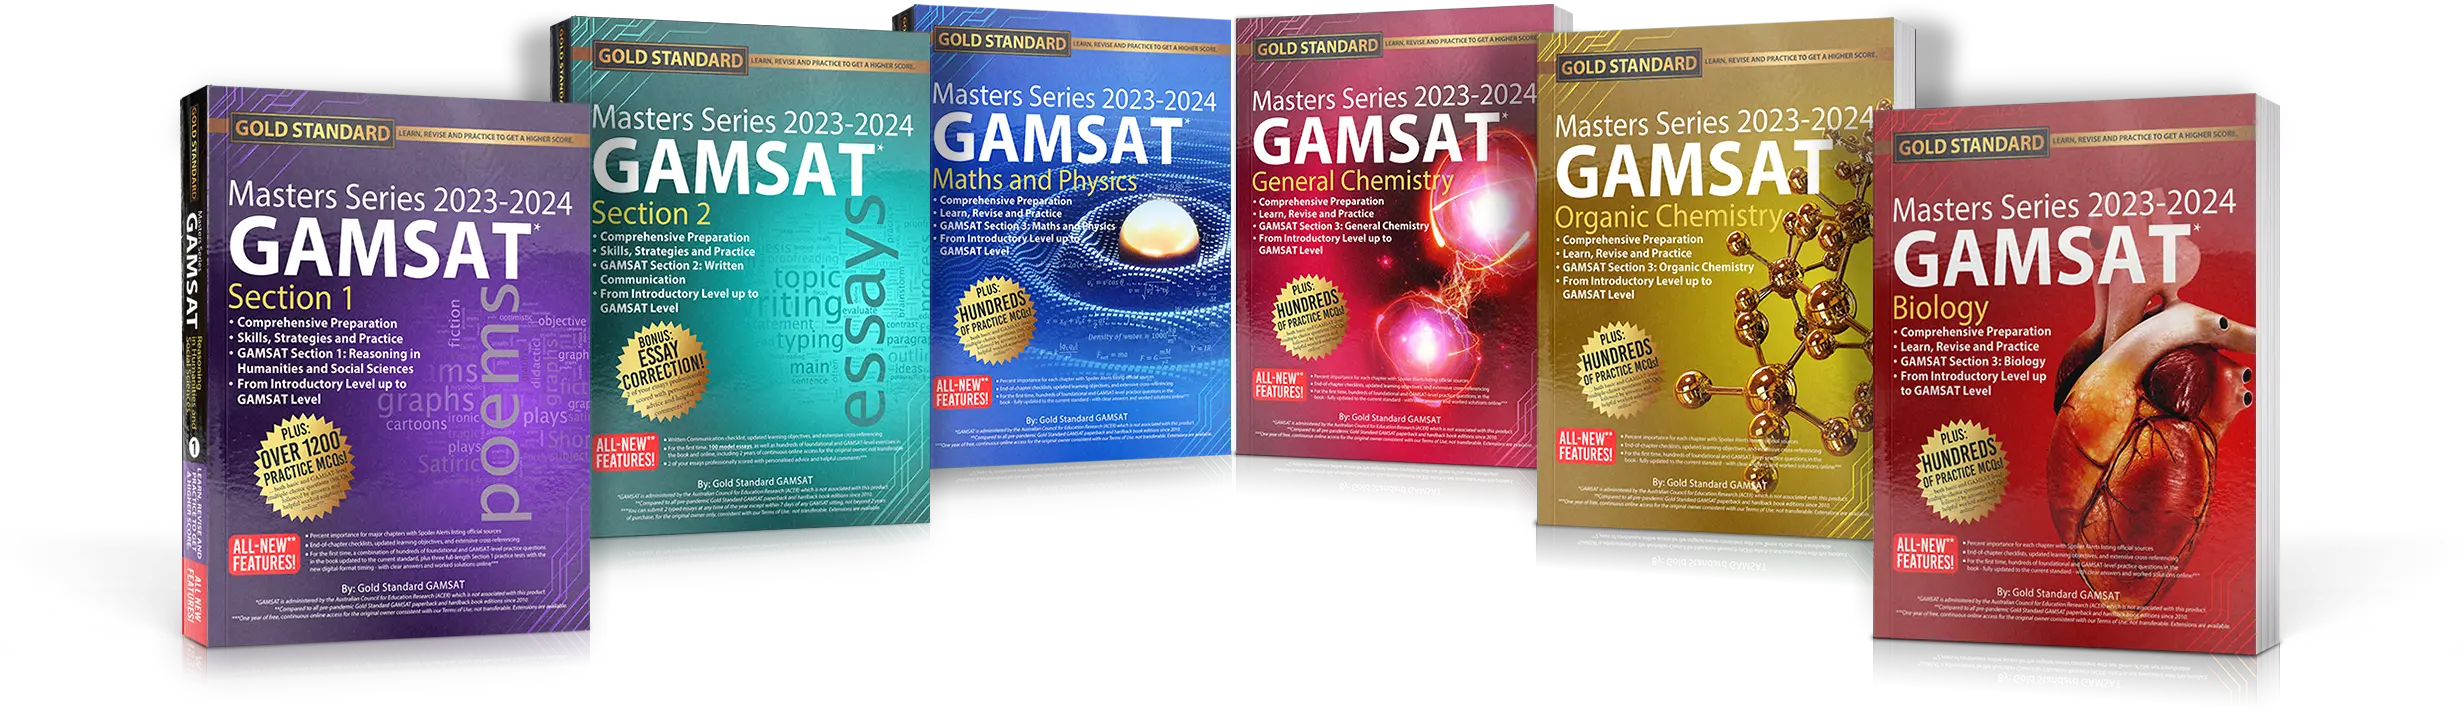 The 2022-2023 New Masters Series GAMSAT Books